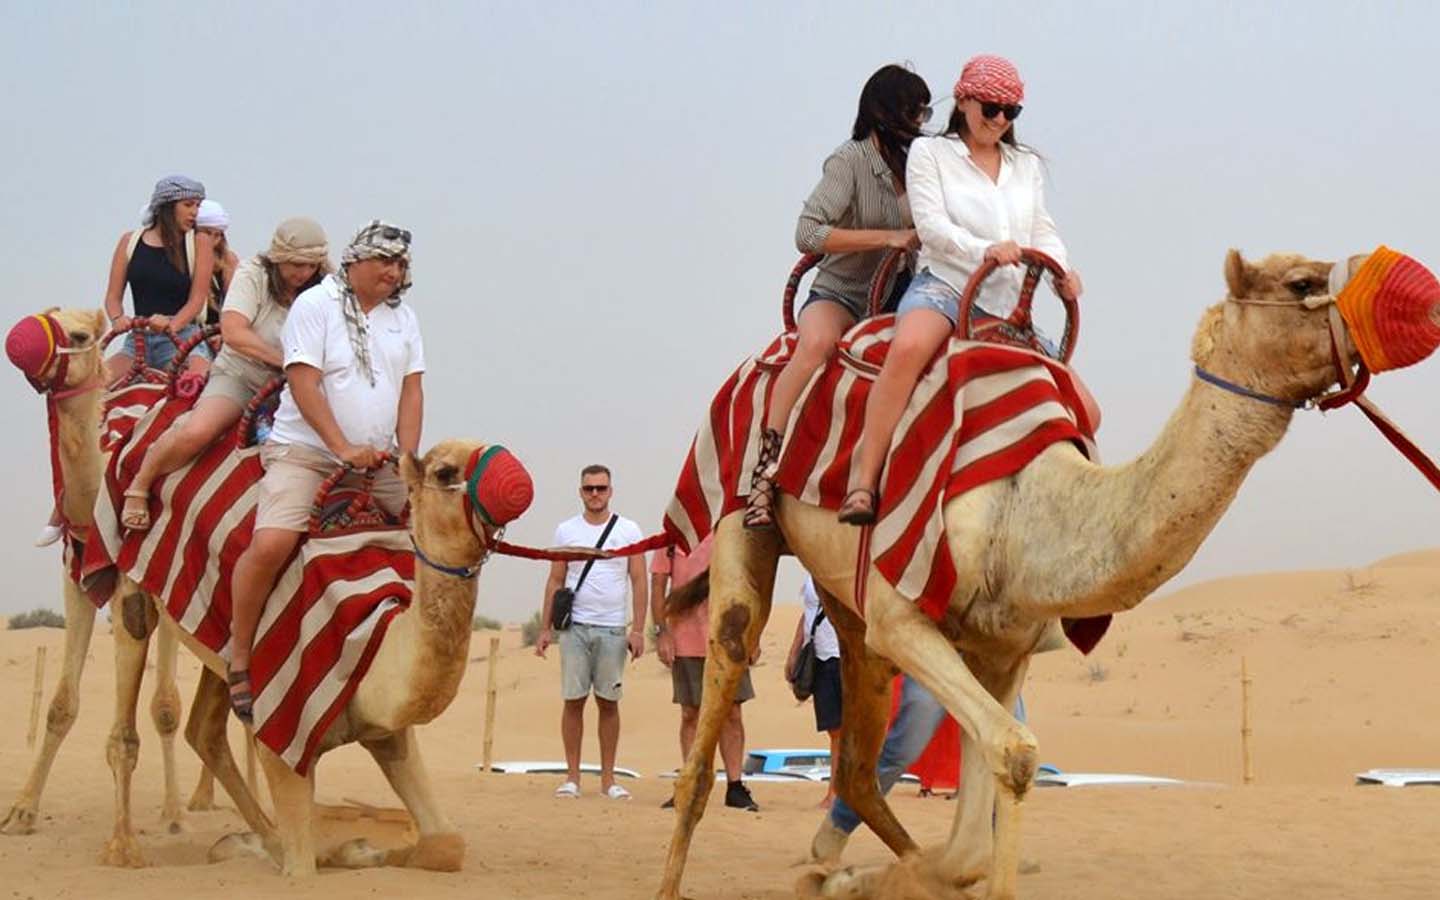 desert safari dubai camel ride